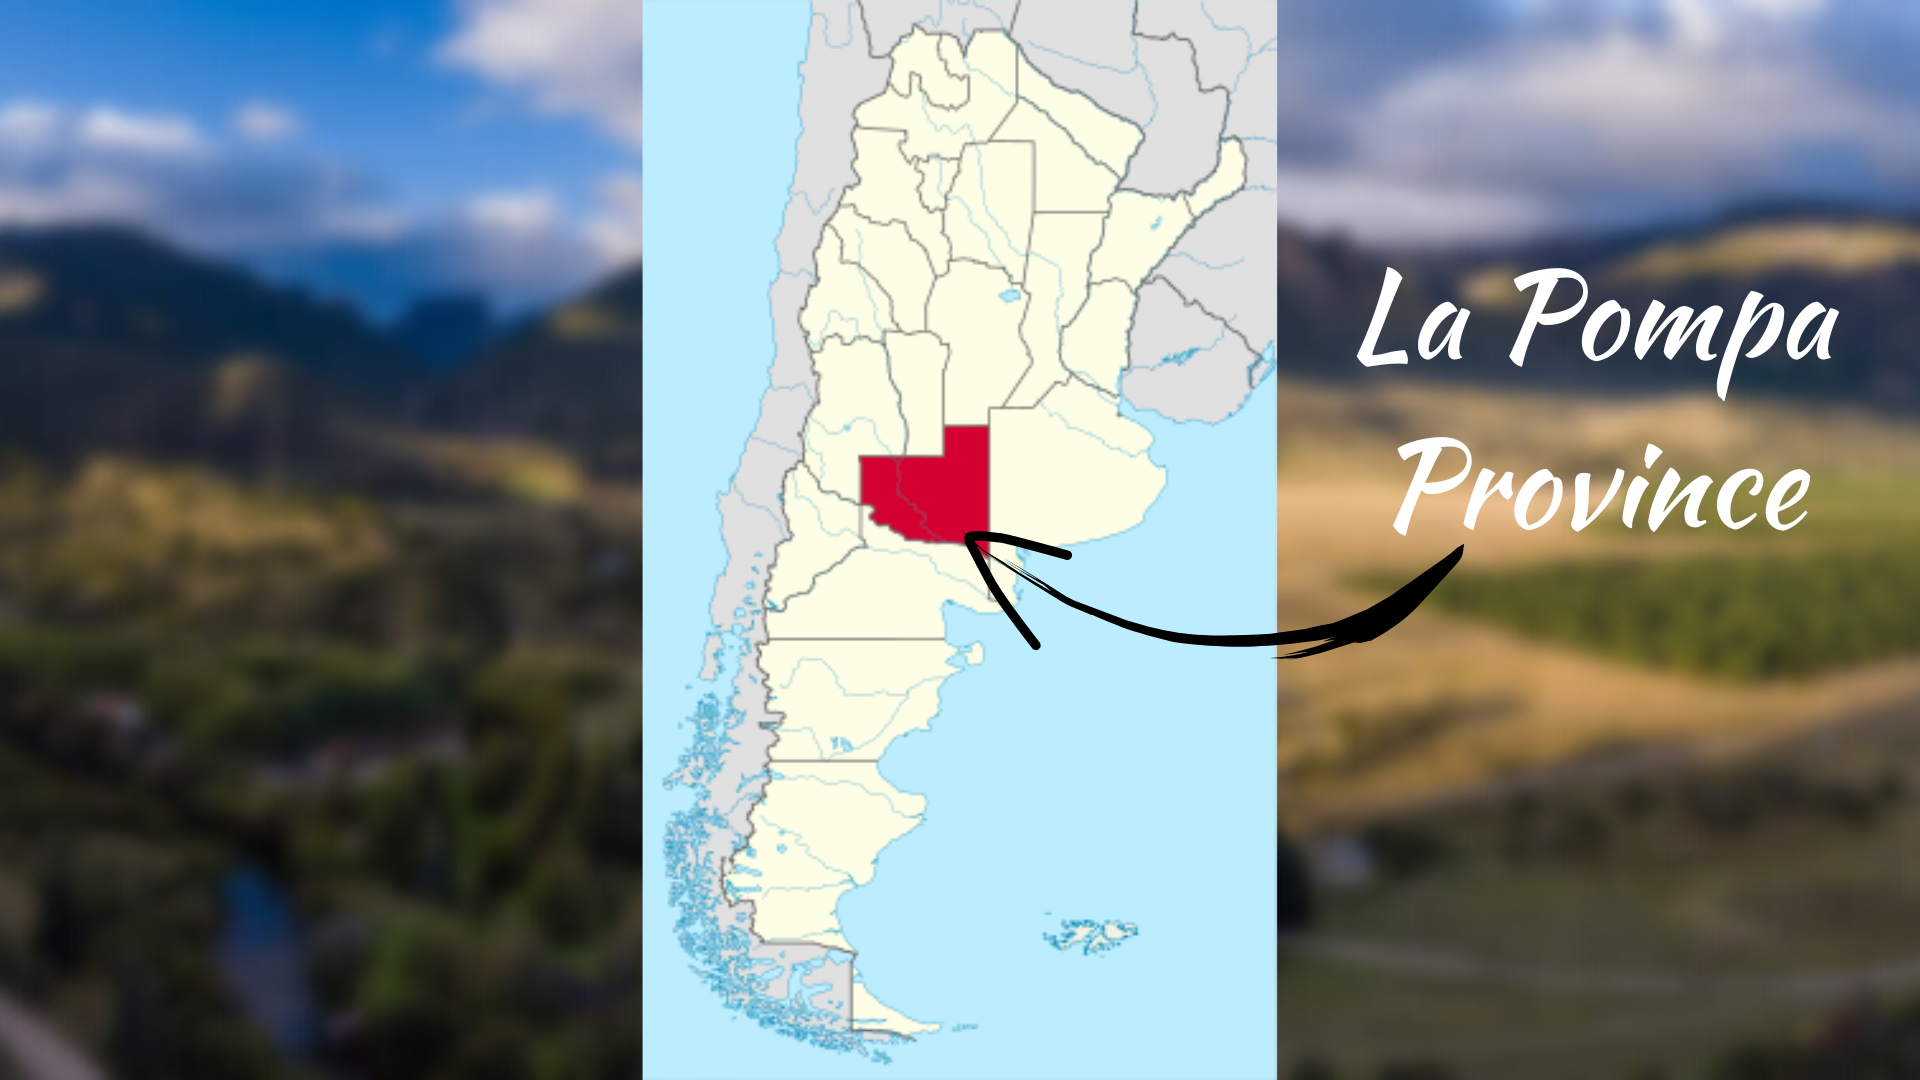 La Pompa Province